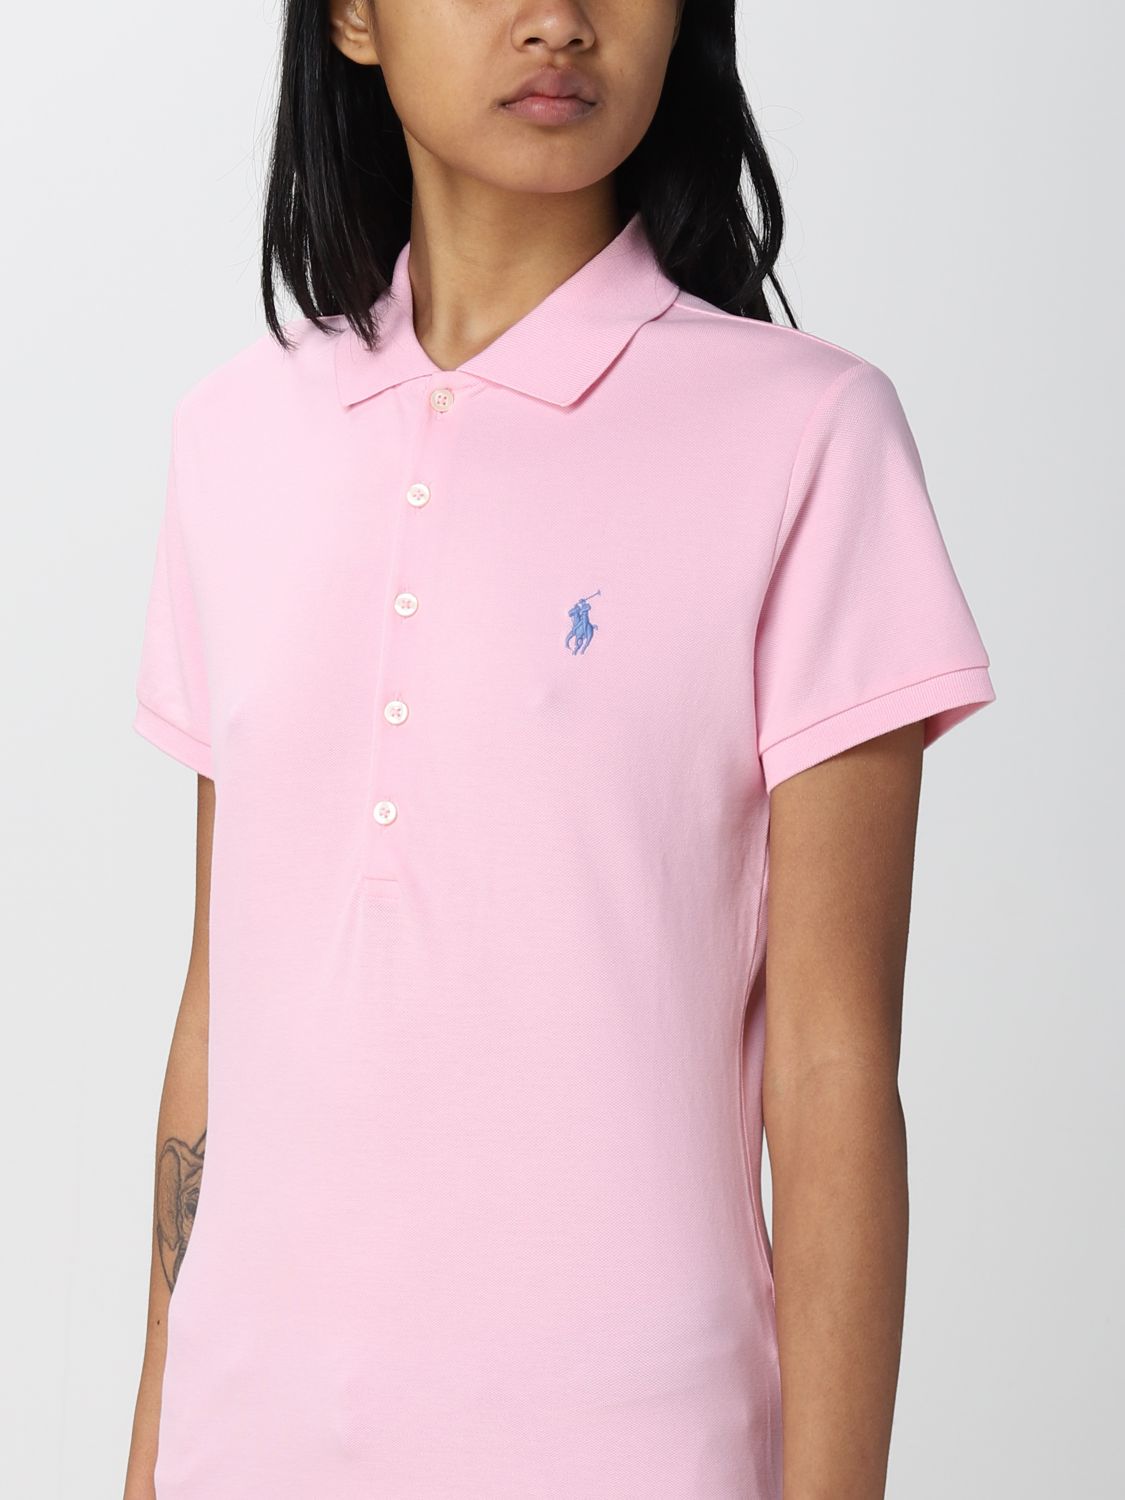 POLO RALPH LAUREN: polo shirt for woman - Baby Pink | Polo Ralph Lauren  polo shirt 211870245 online on 